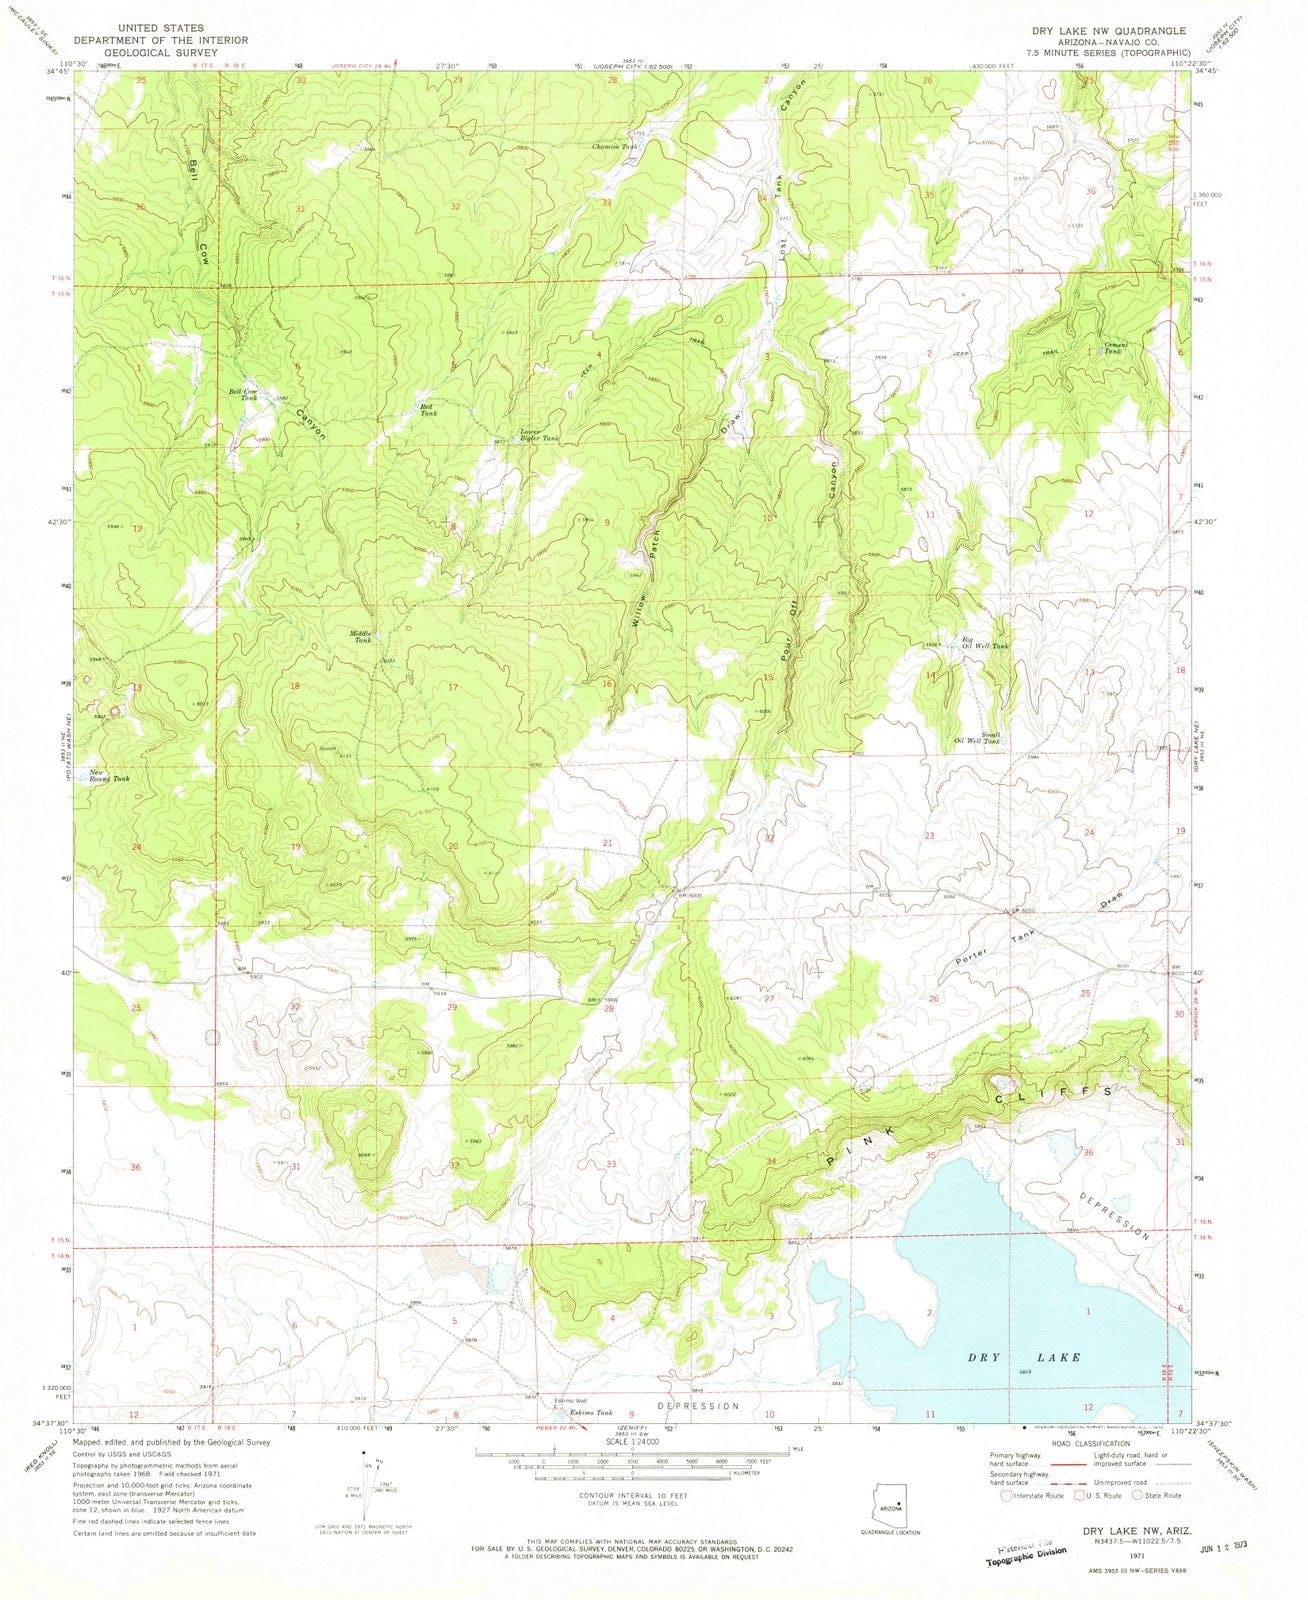 1971 Dry Lake, AZ - Arizona - USGS Topographic Map v2